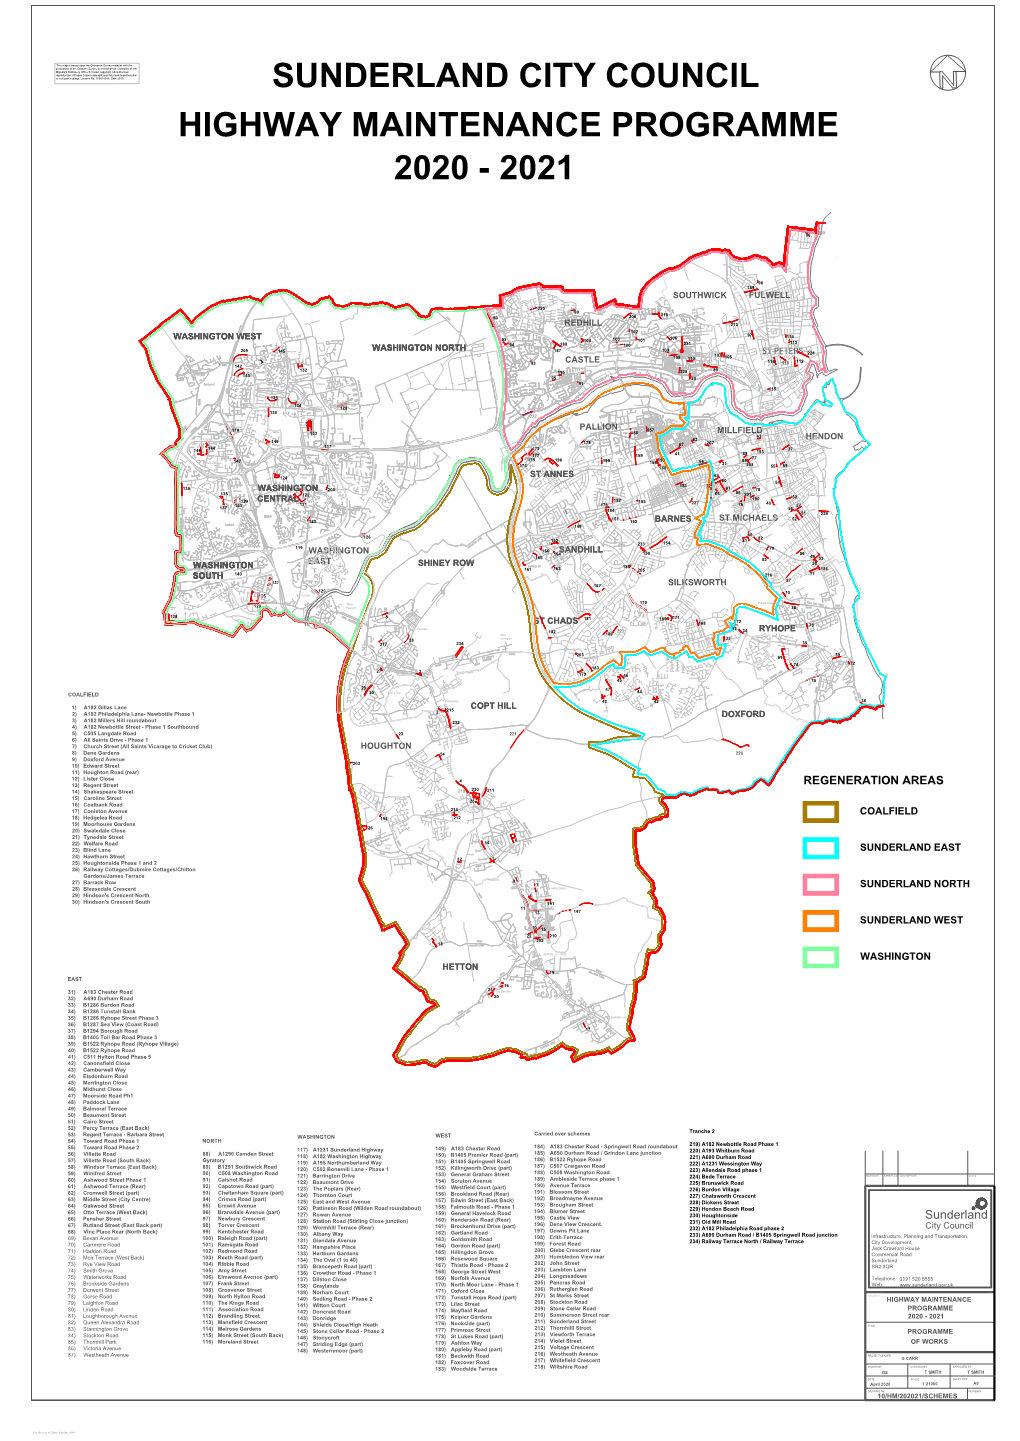 Sunderland City Council Highway Maintenance Programme 2020 - 2021